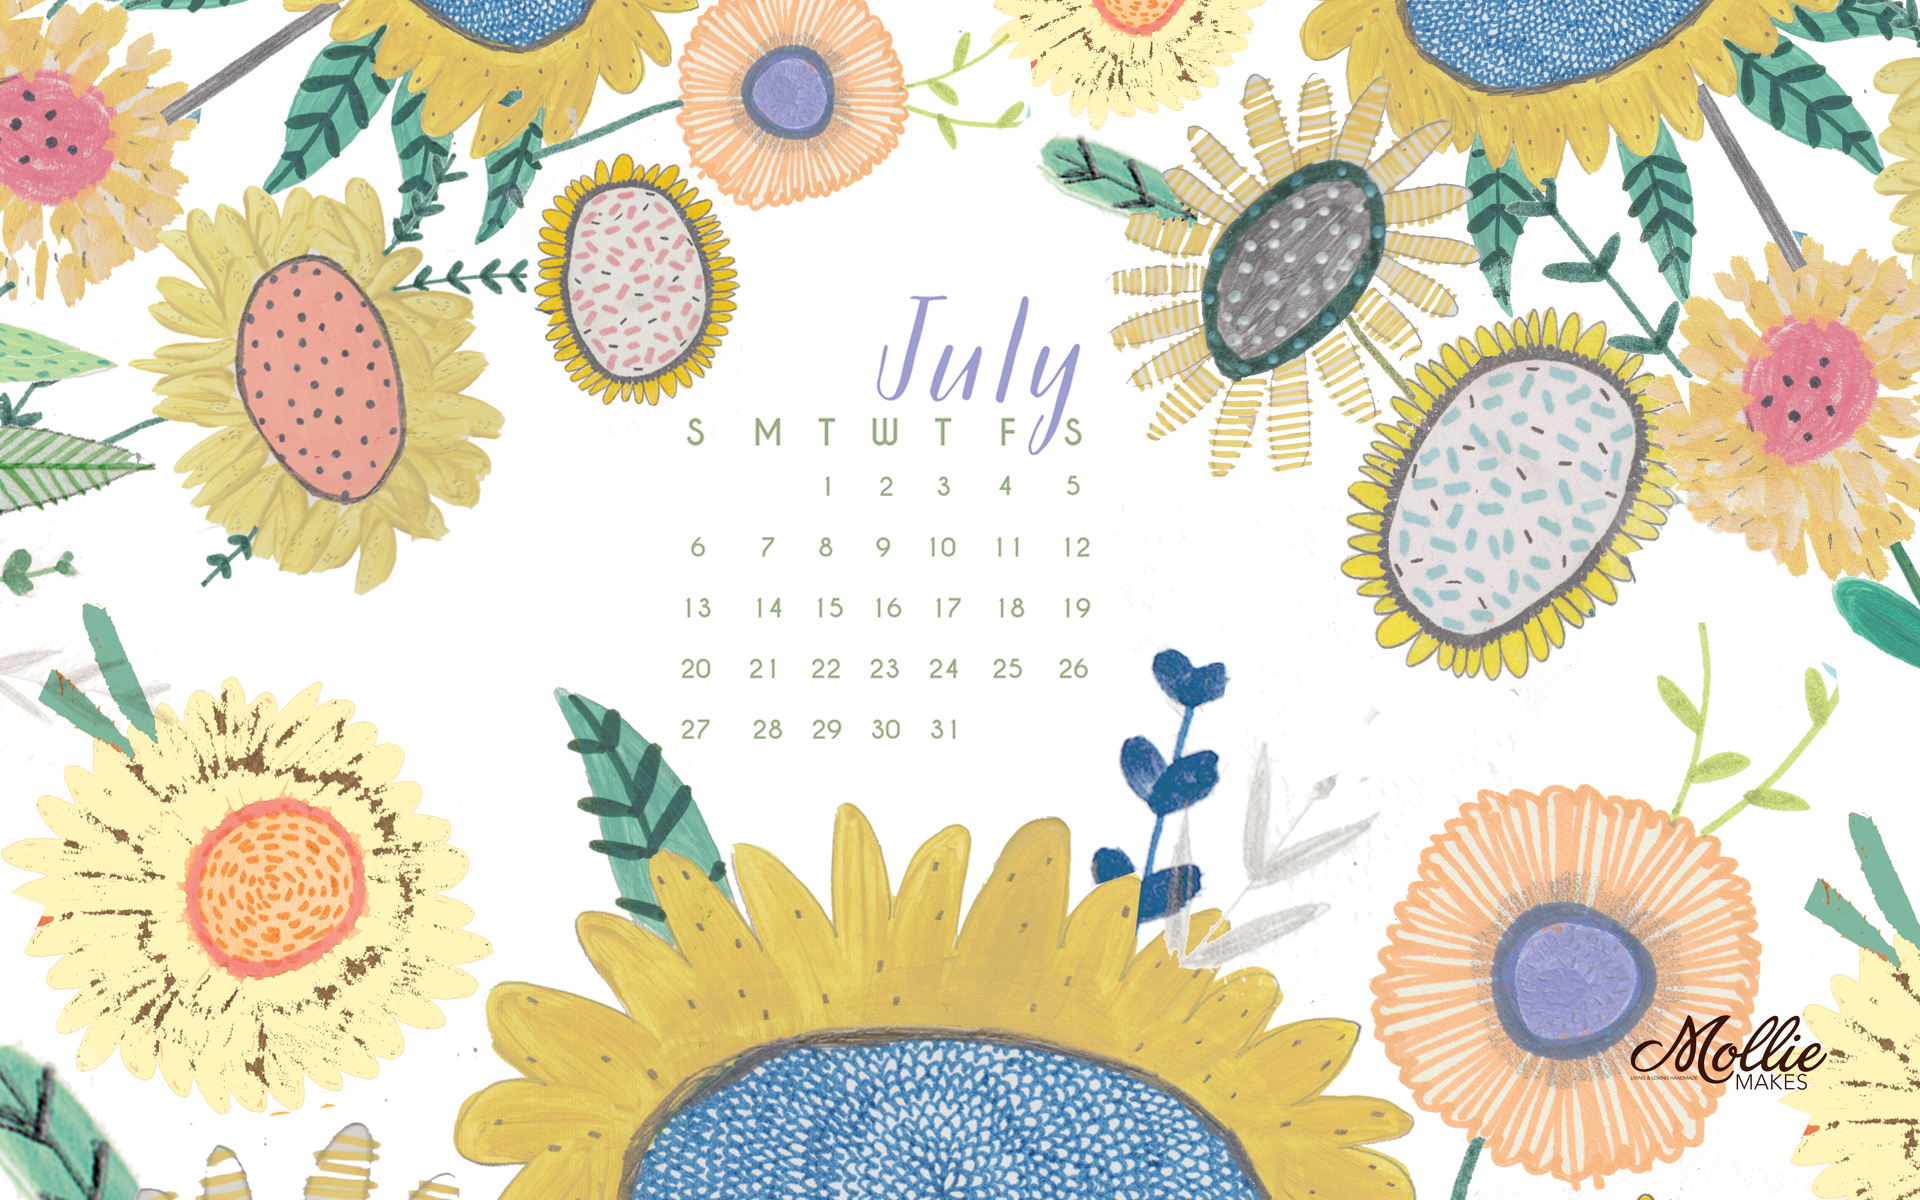 free-download-july-2017-sunflower-desktop-calendar-free-july-wallpaper